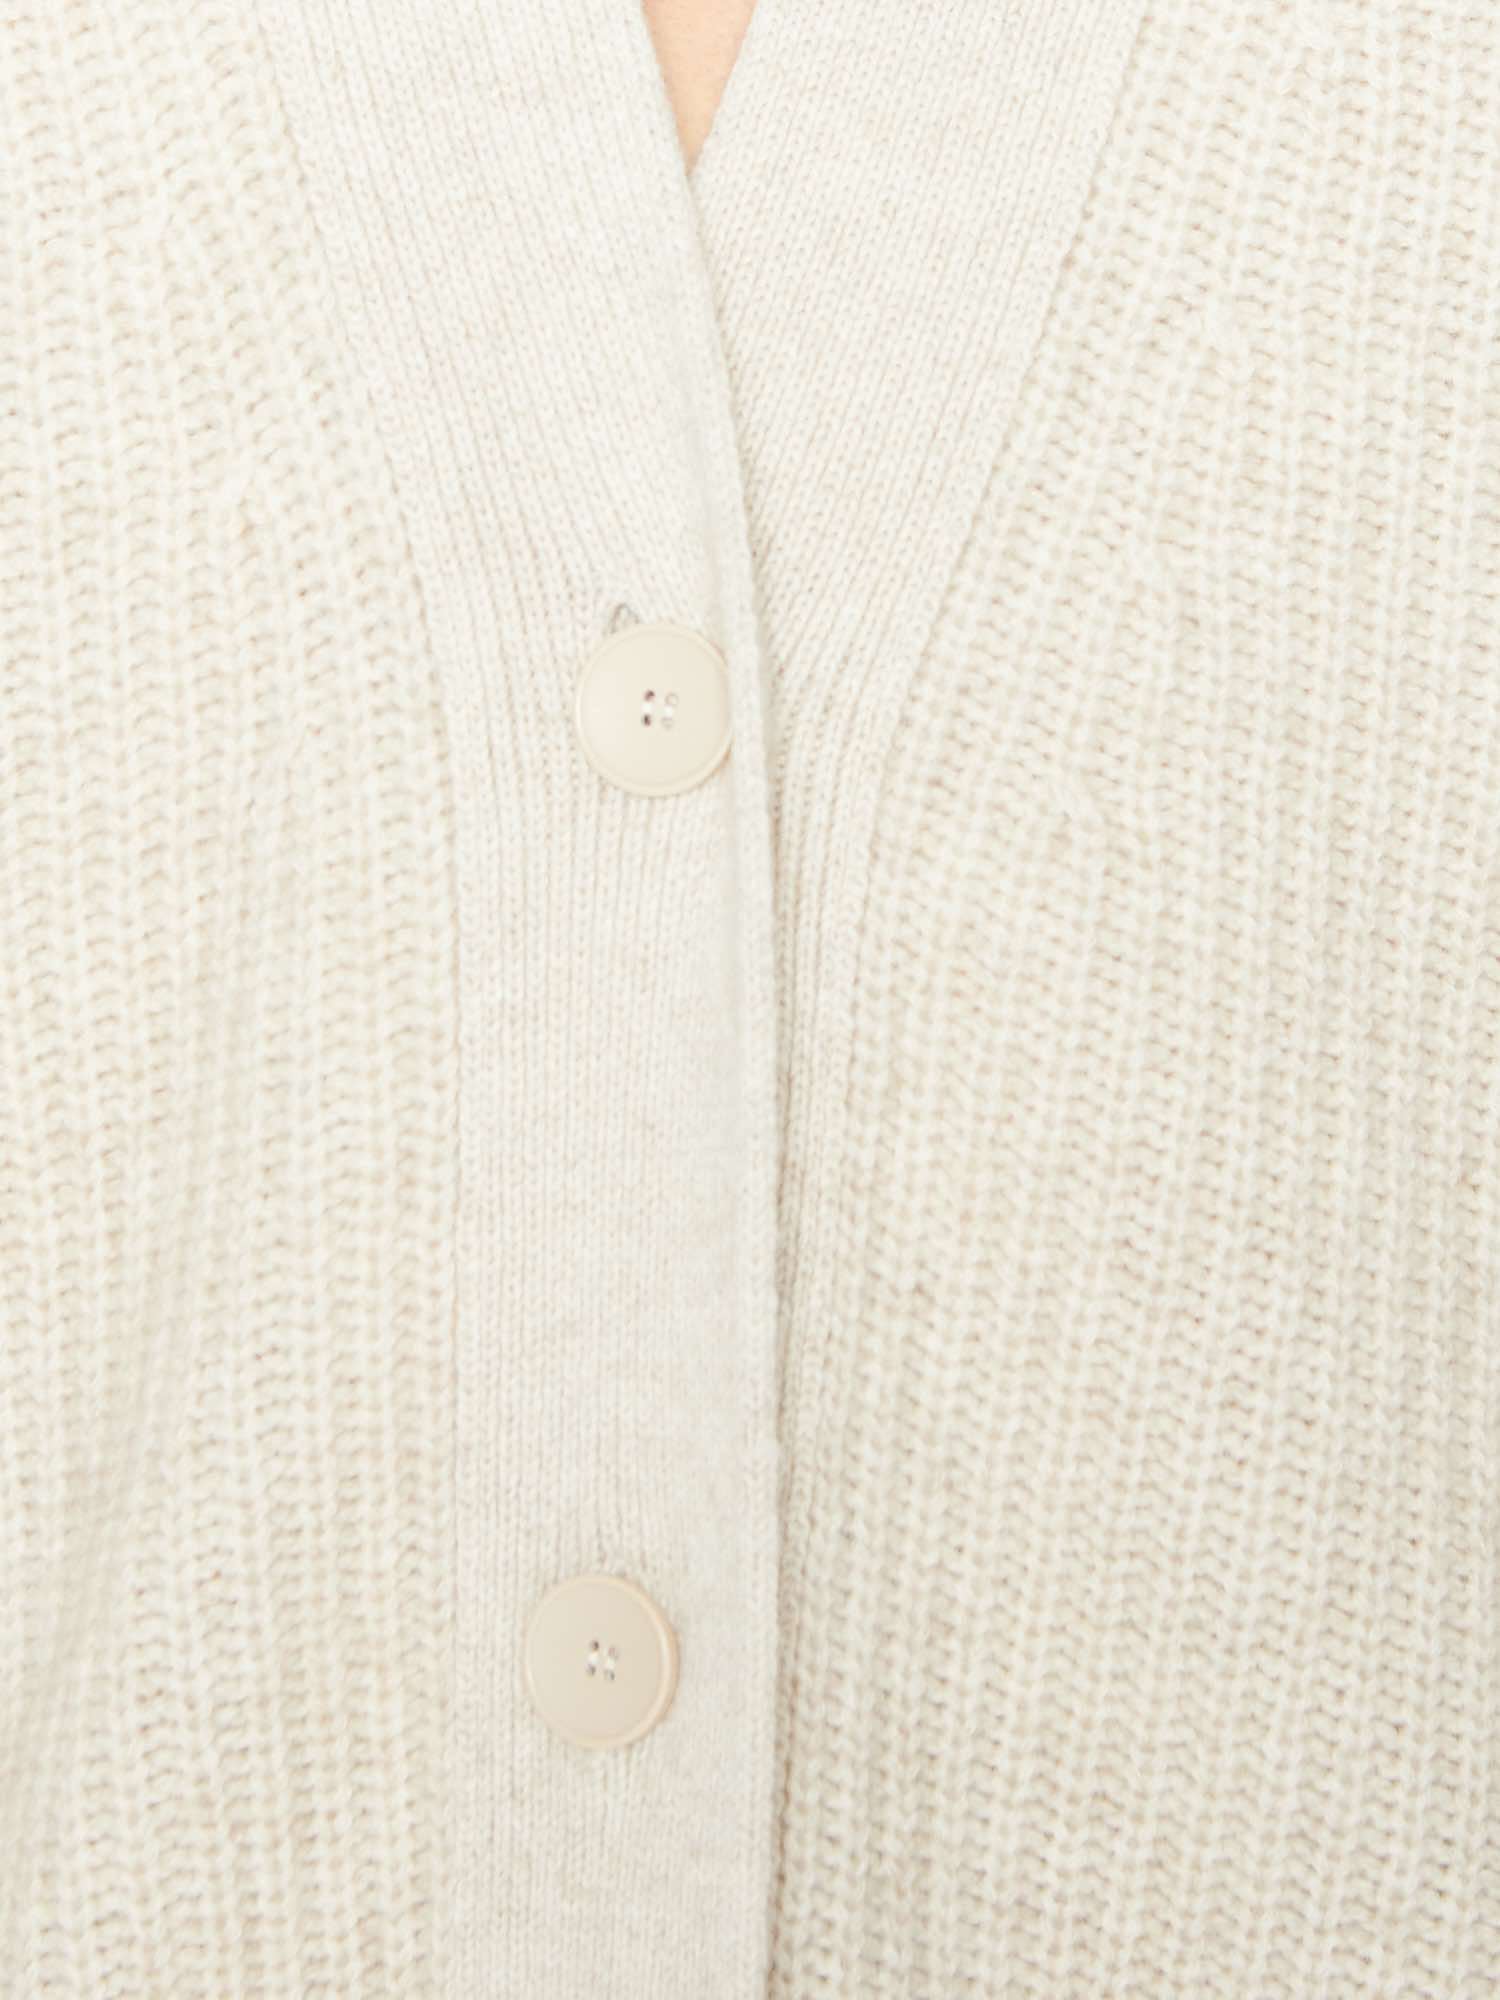 Jenny beige cashmere wool cardigan sweater close up